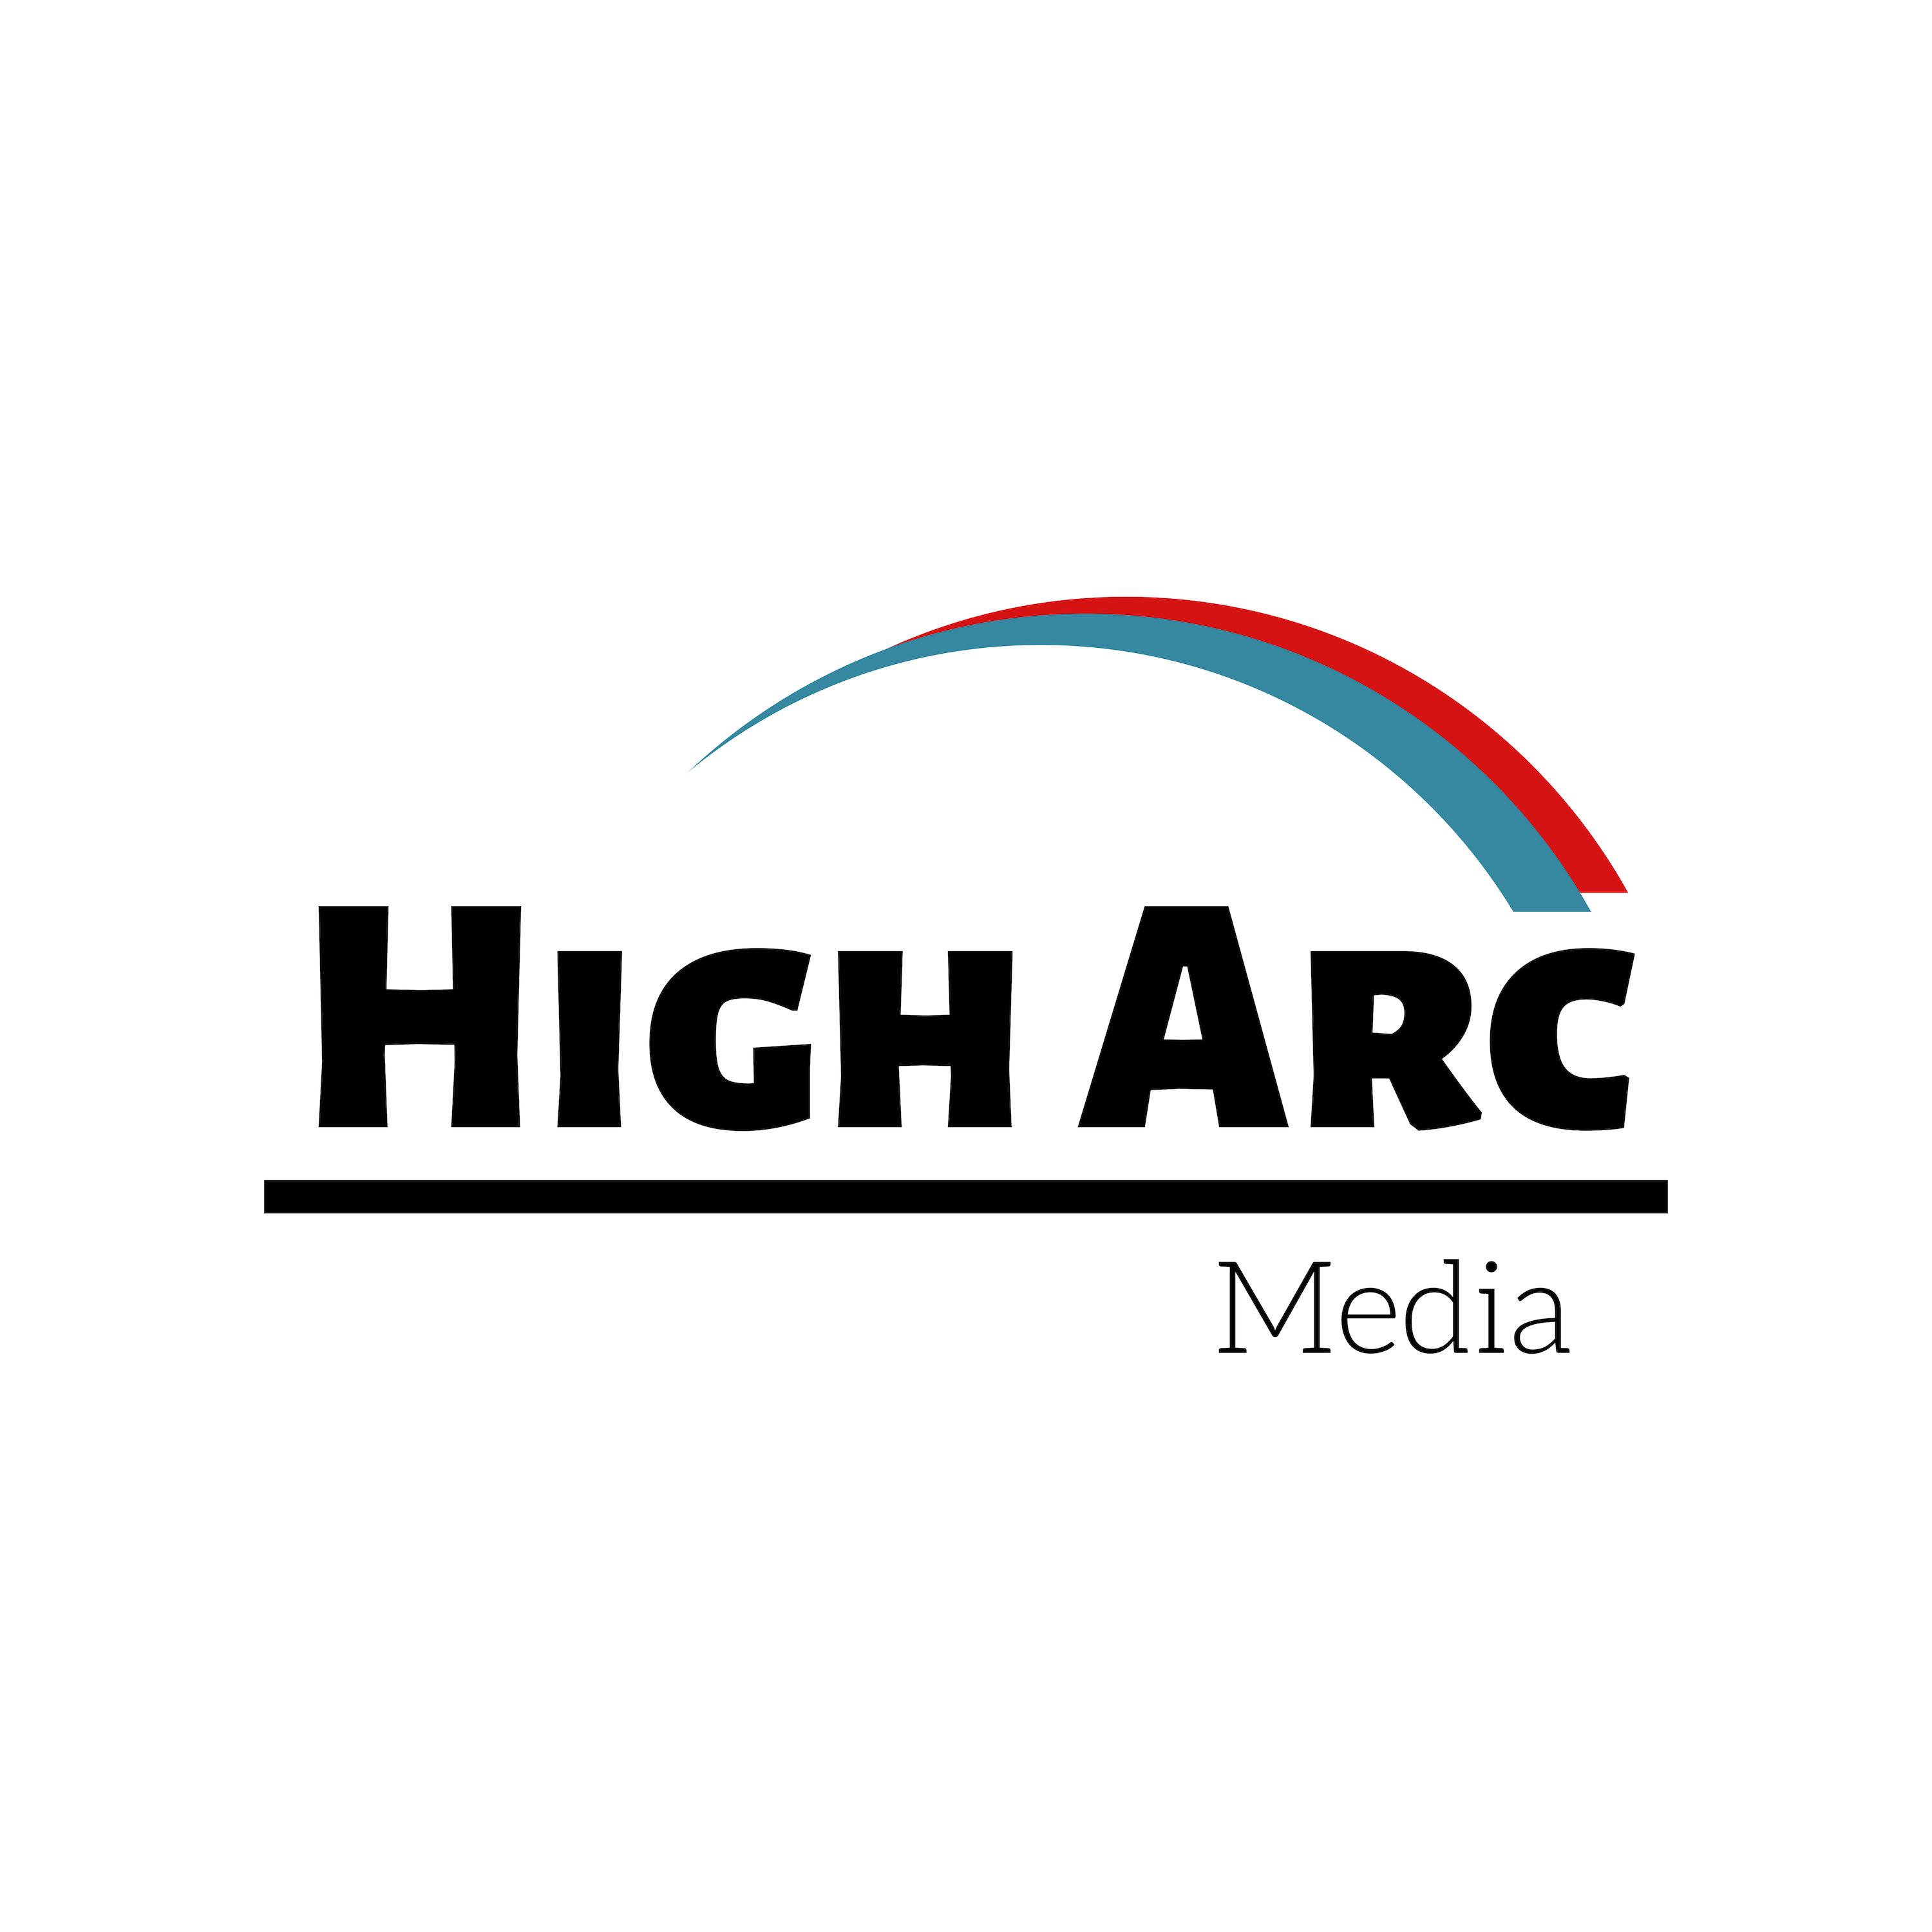 High Arc Media Inc. profile on Qualified.One